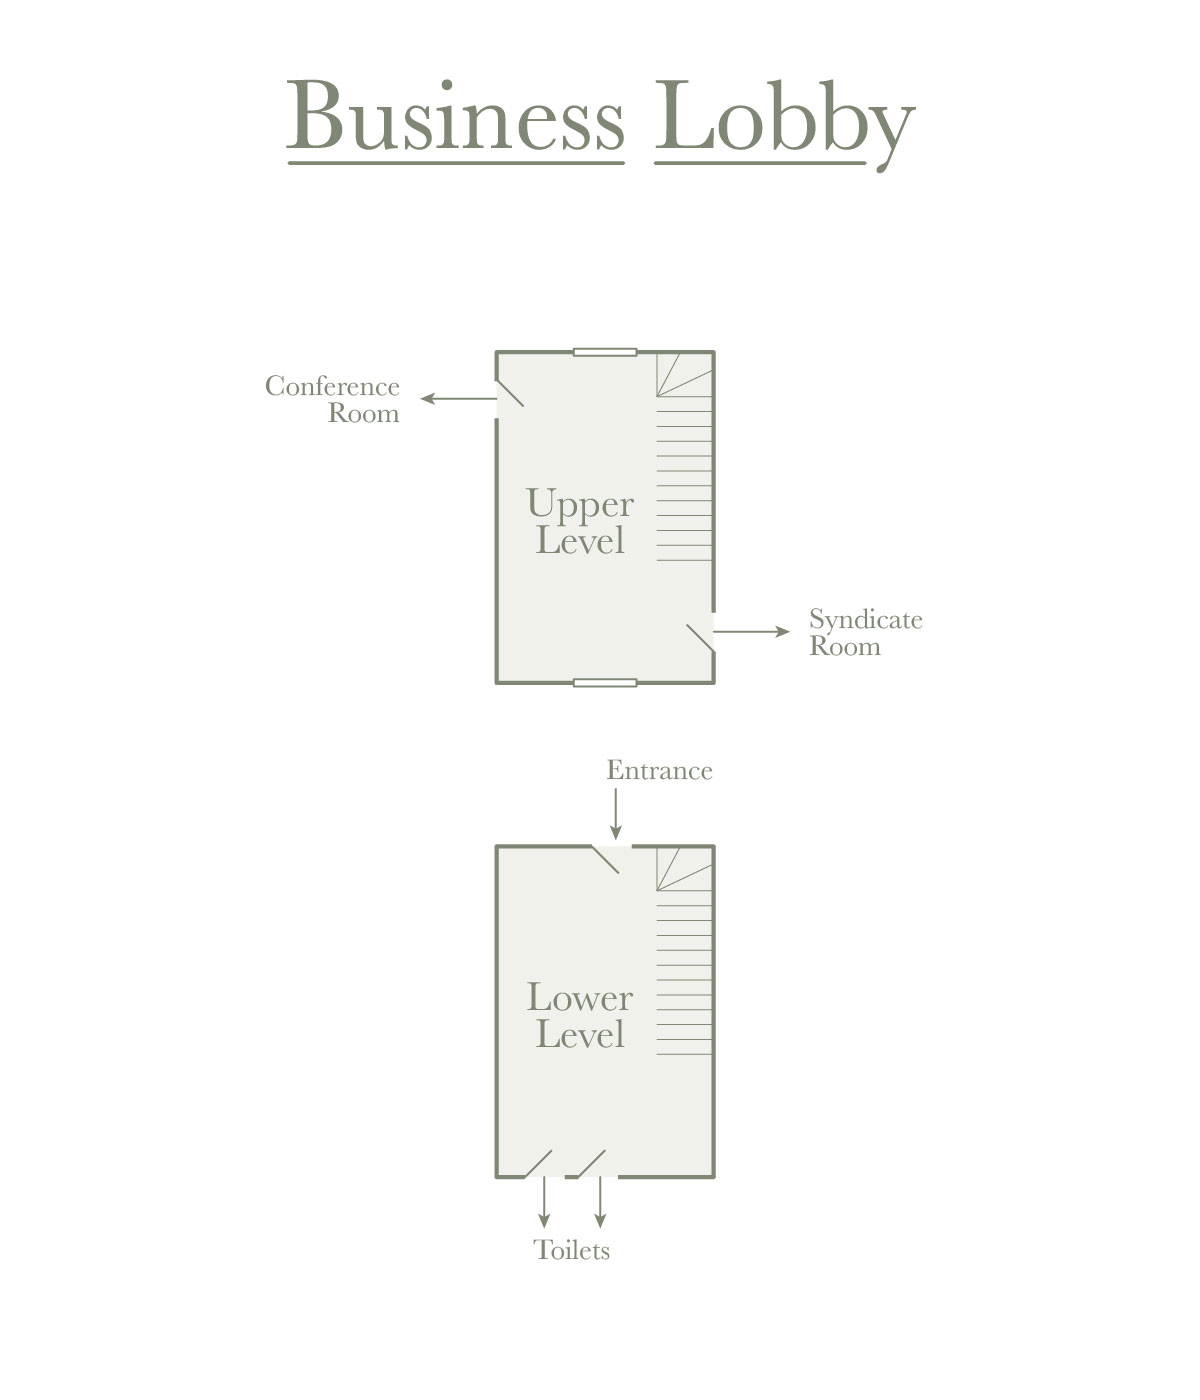 Business Lobby Room Plan